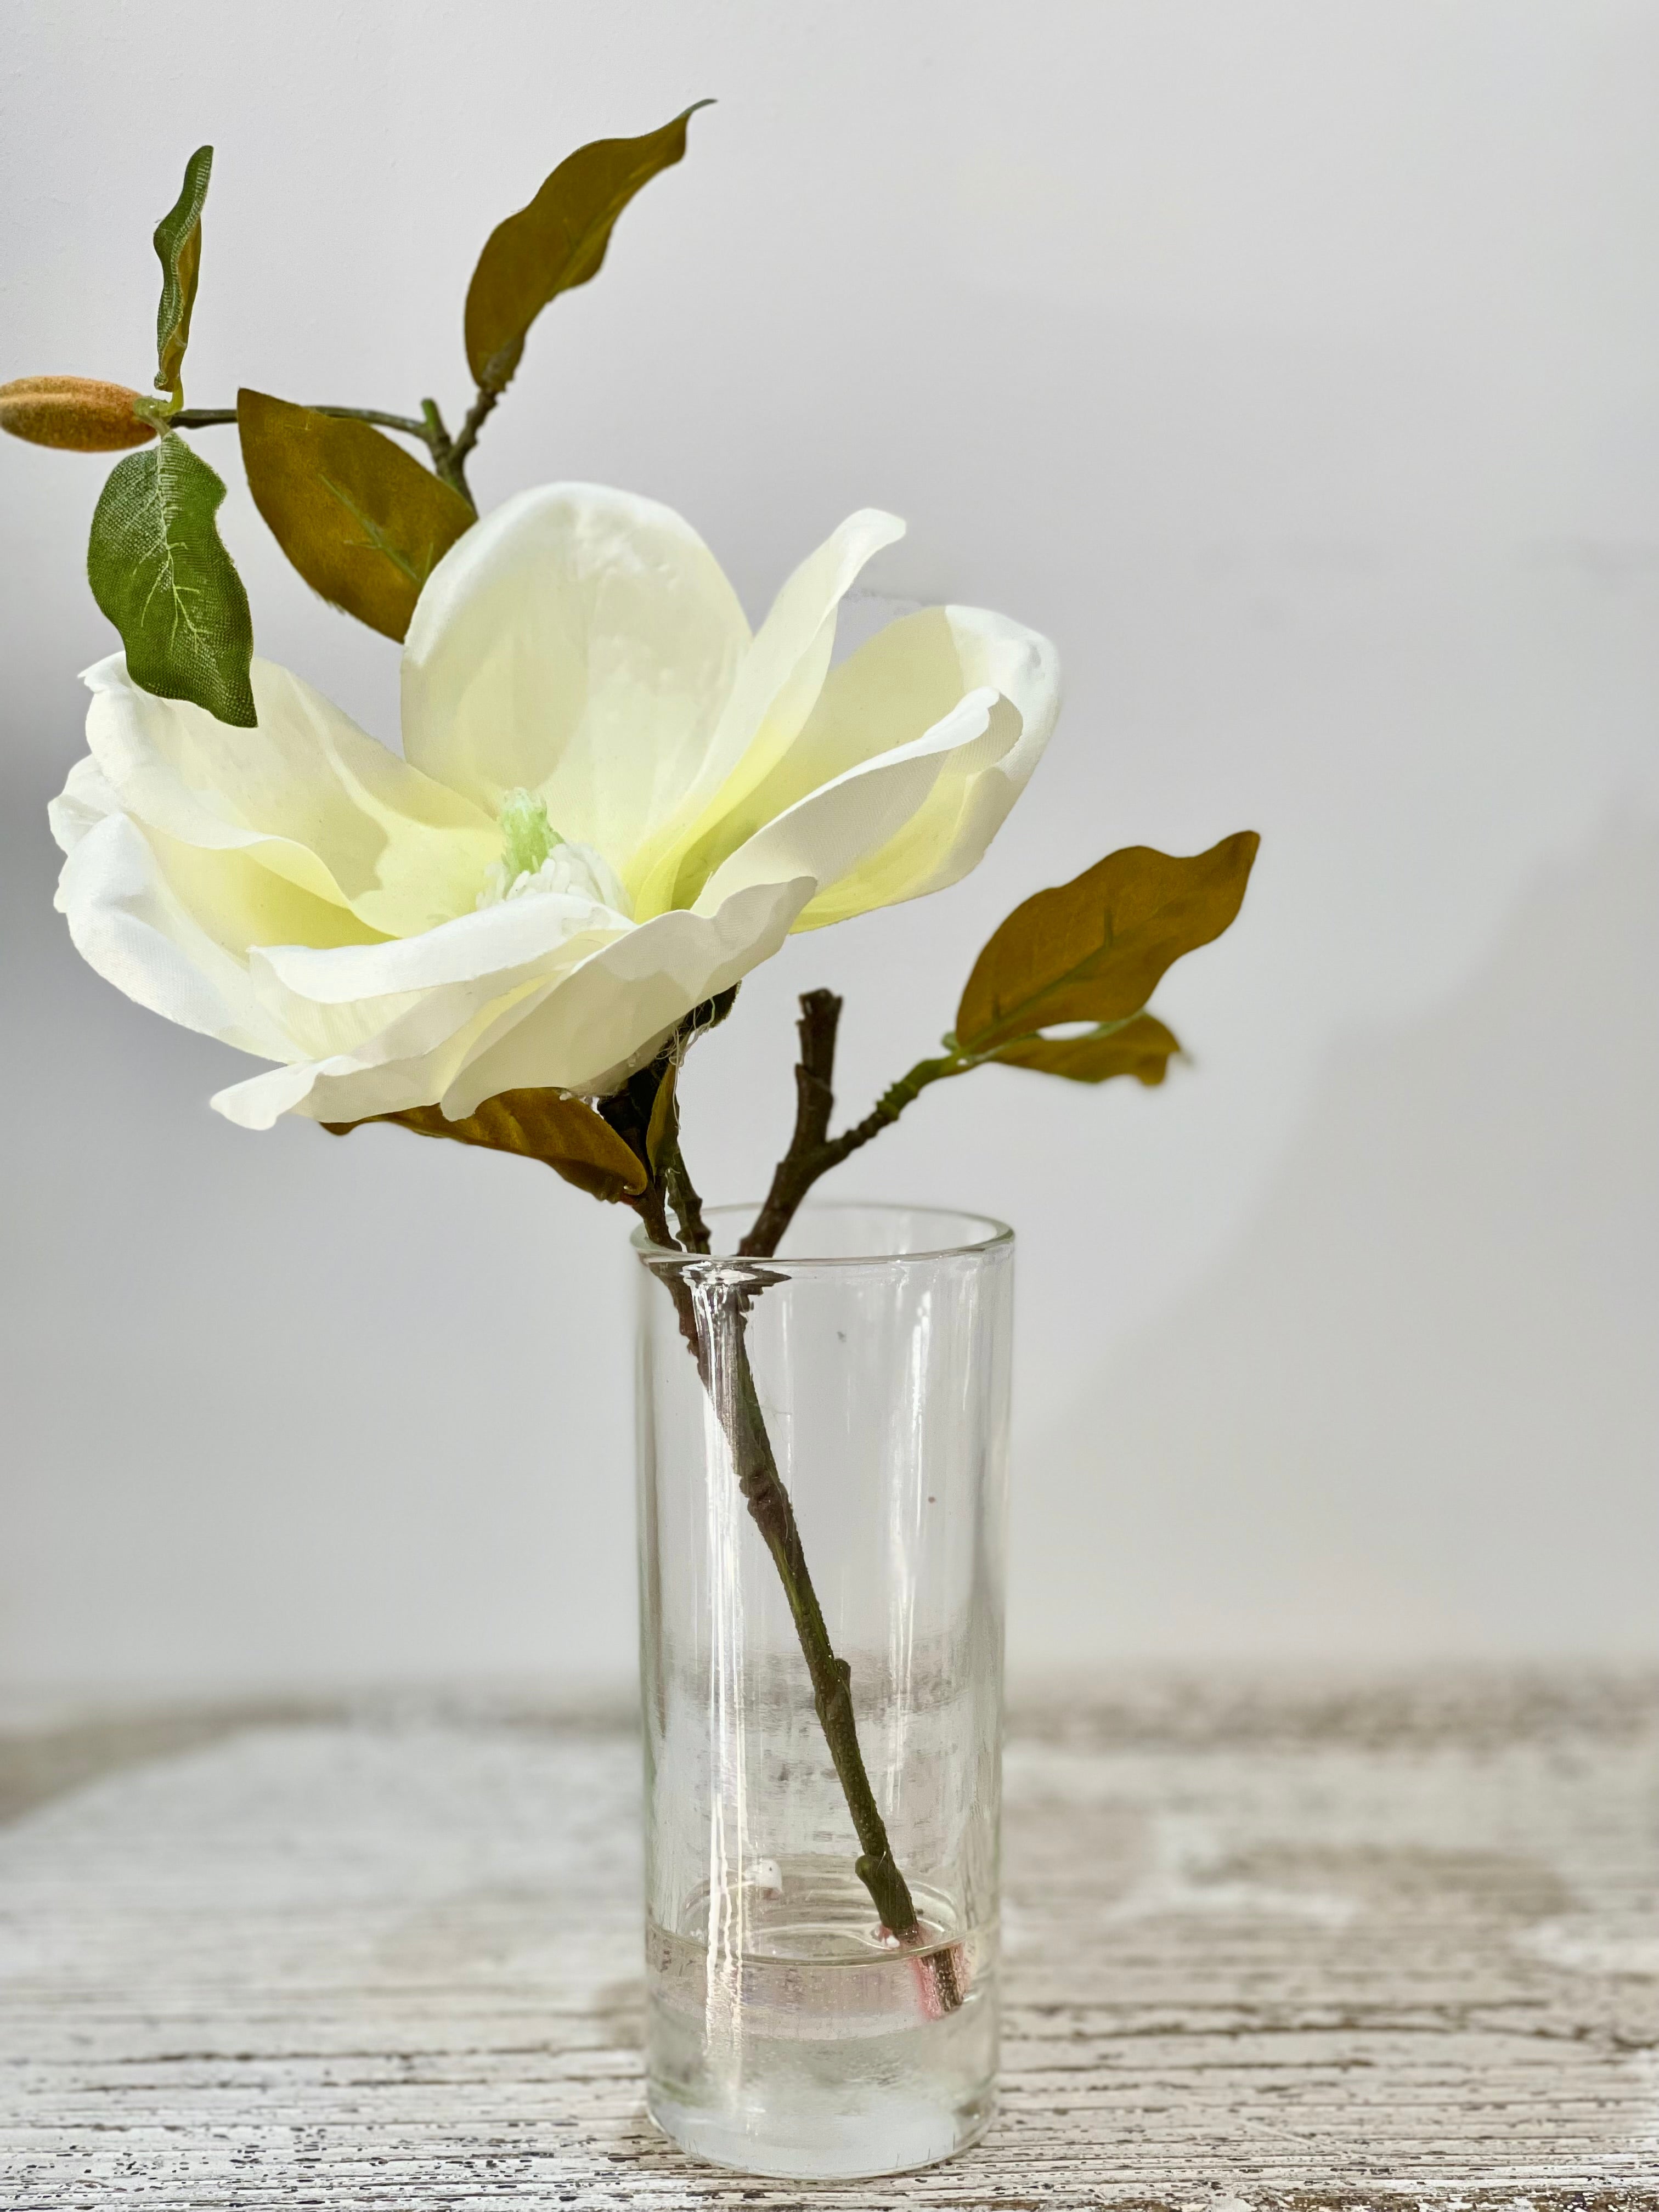 Singular Magnolia in Small Clear Glass Vase